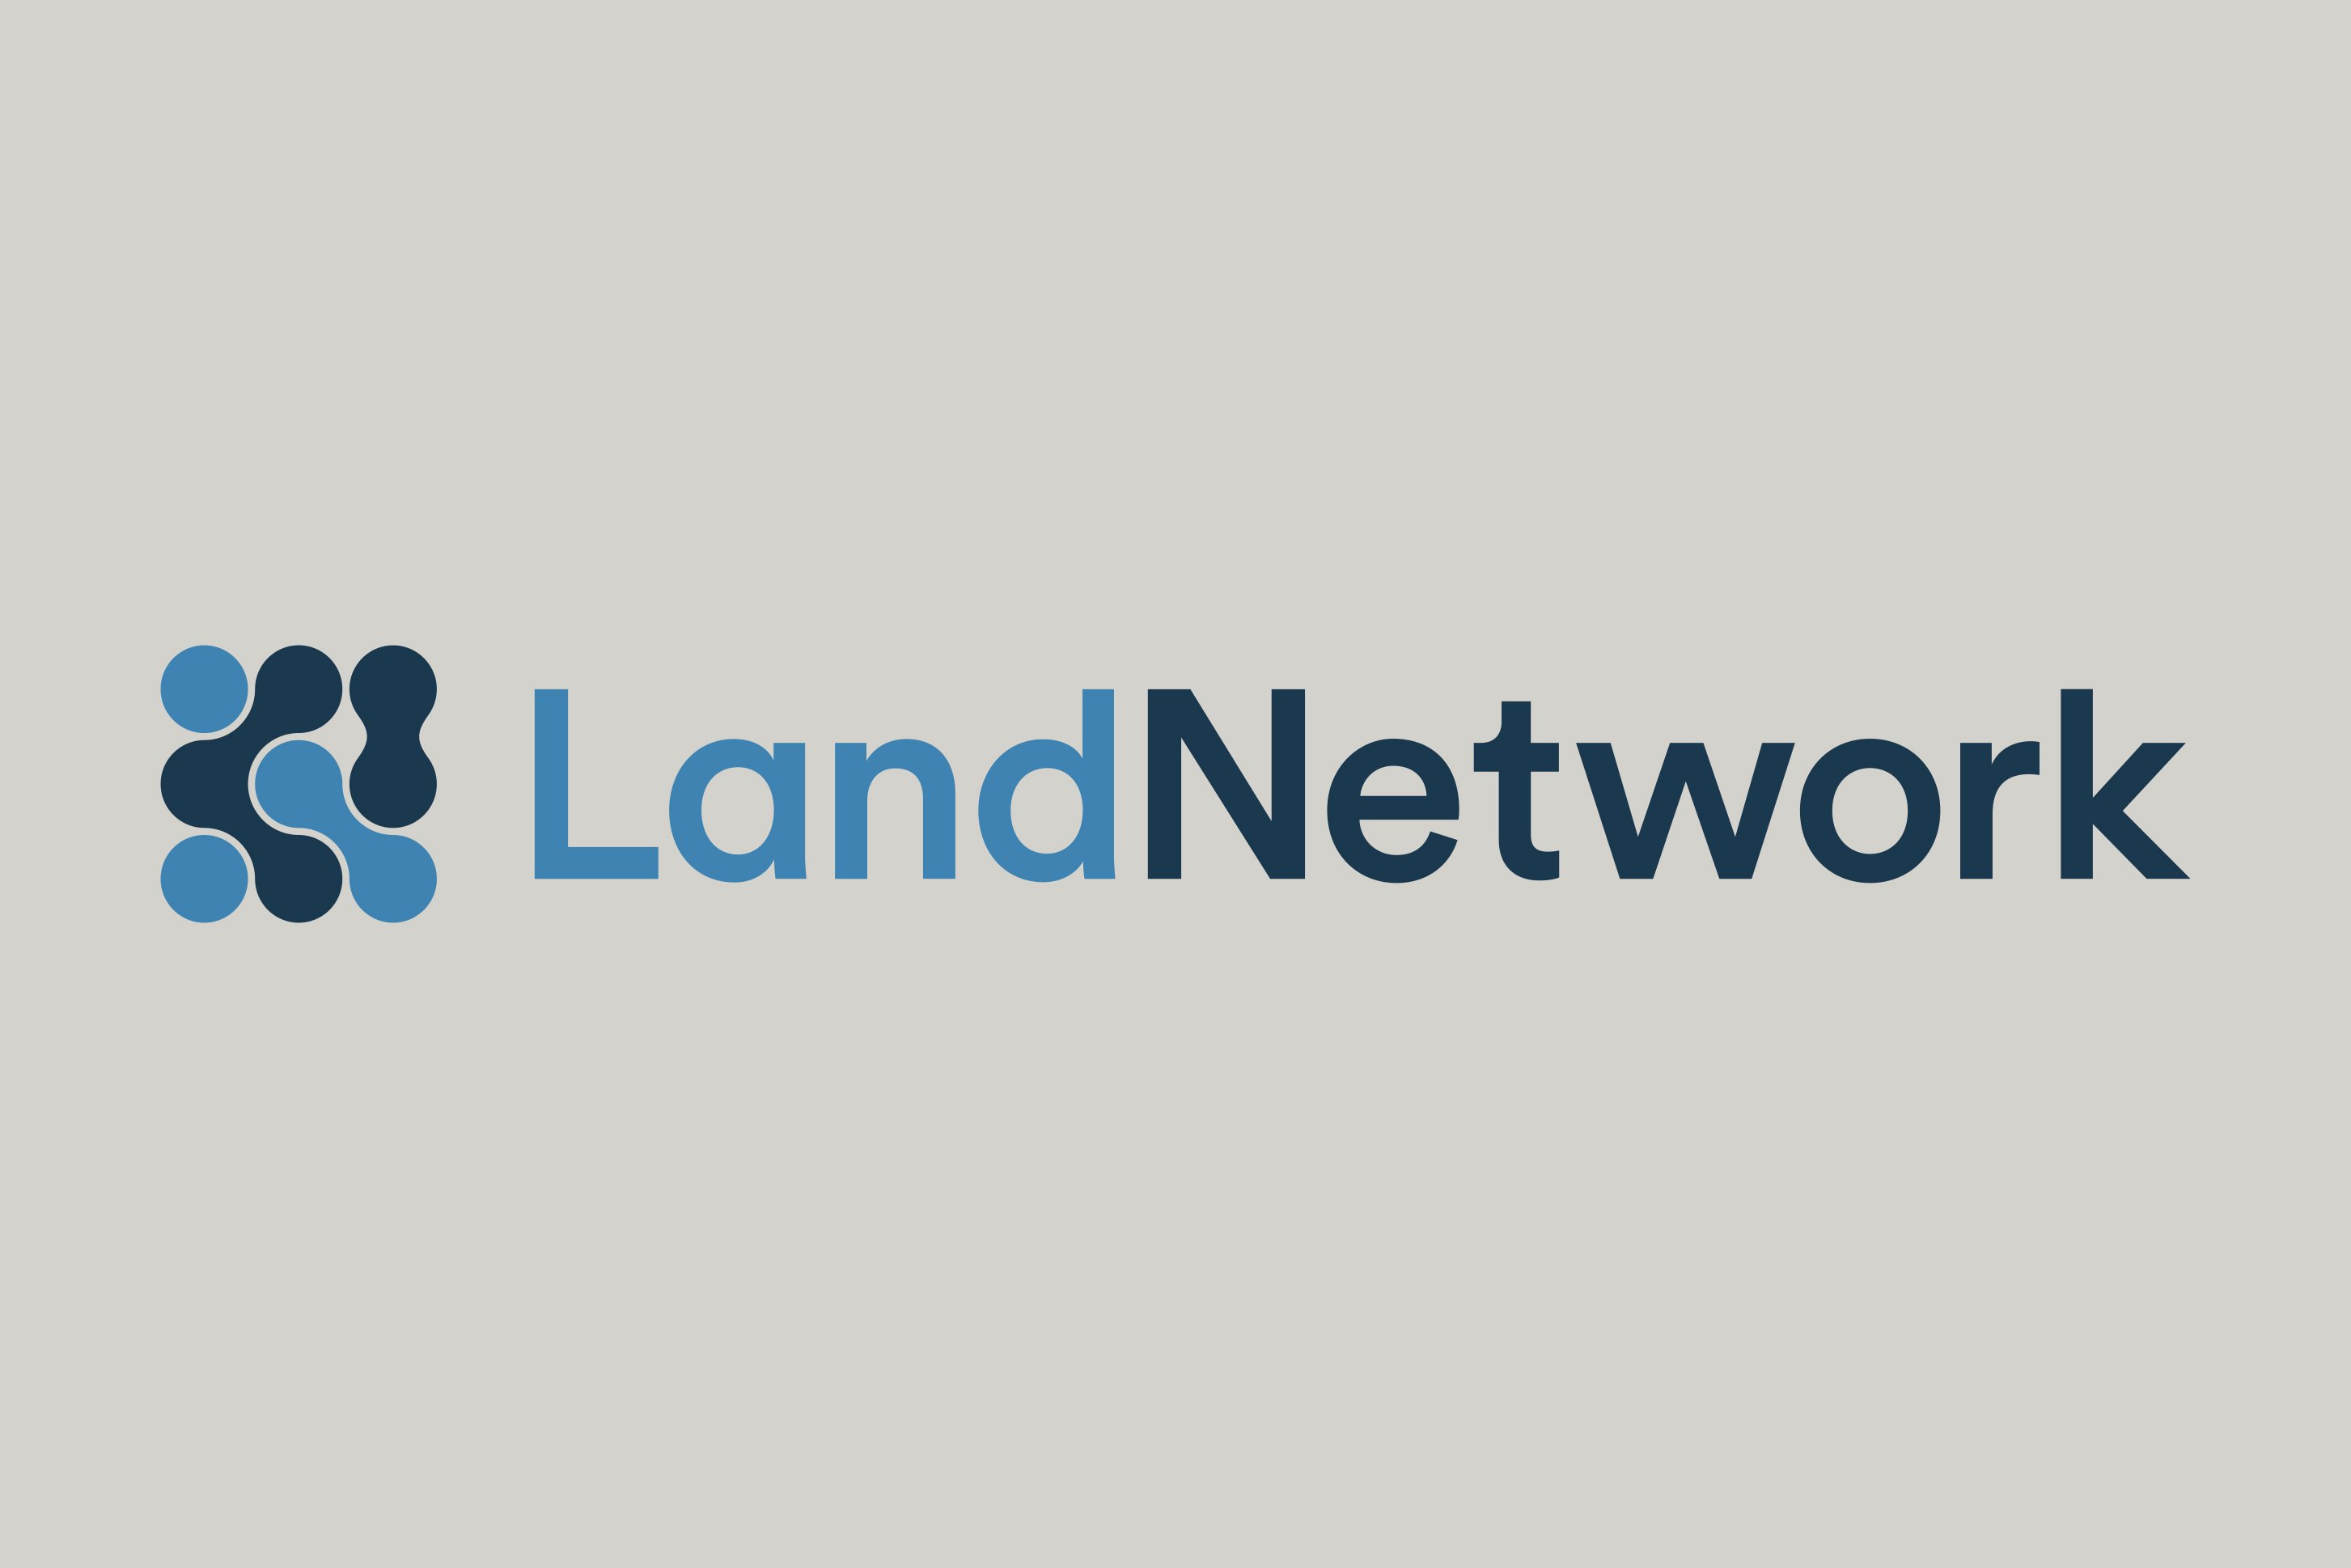 kong interaktion landnetwork logo biel 2020